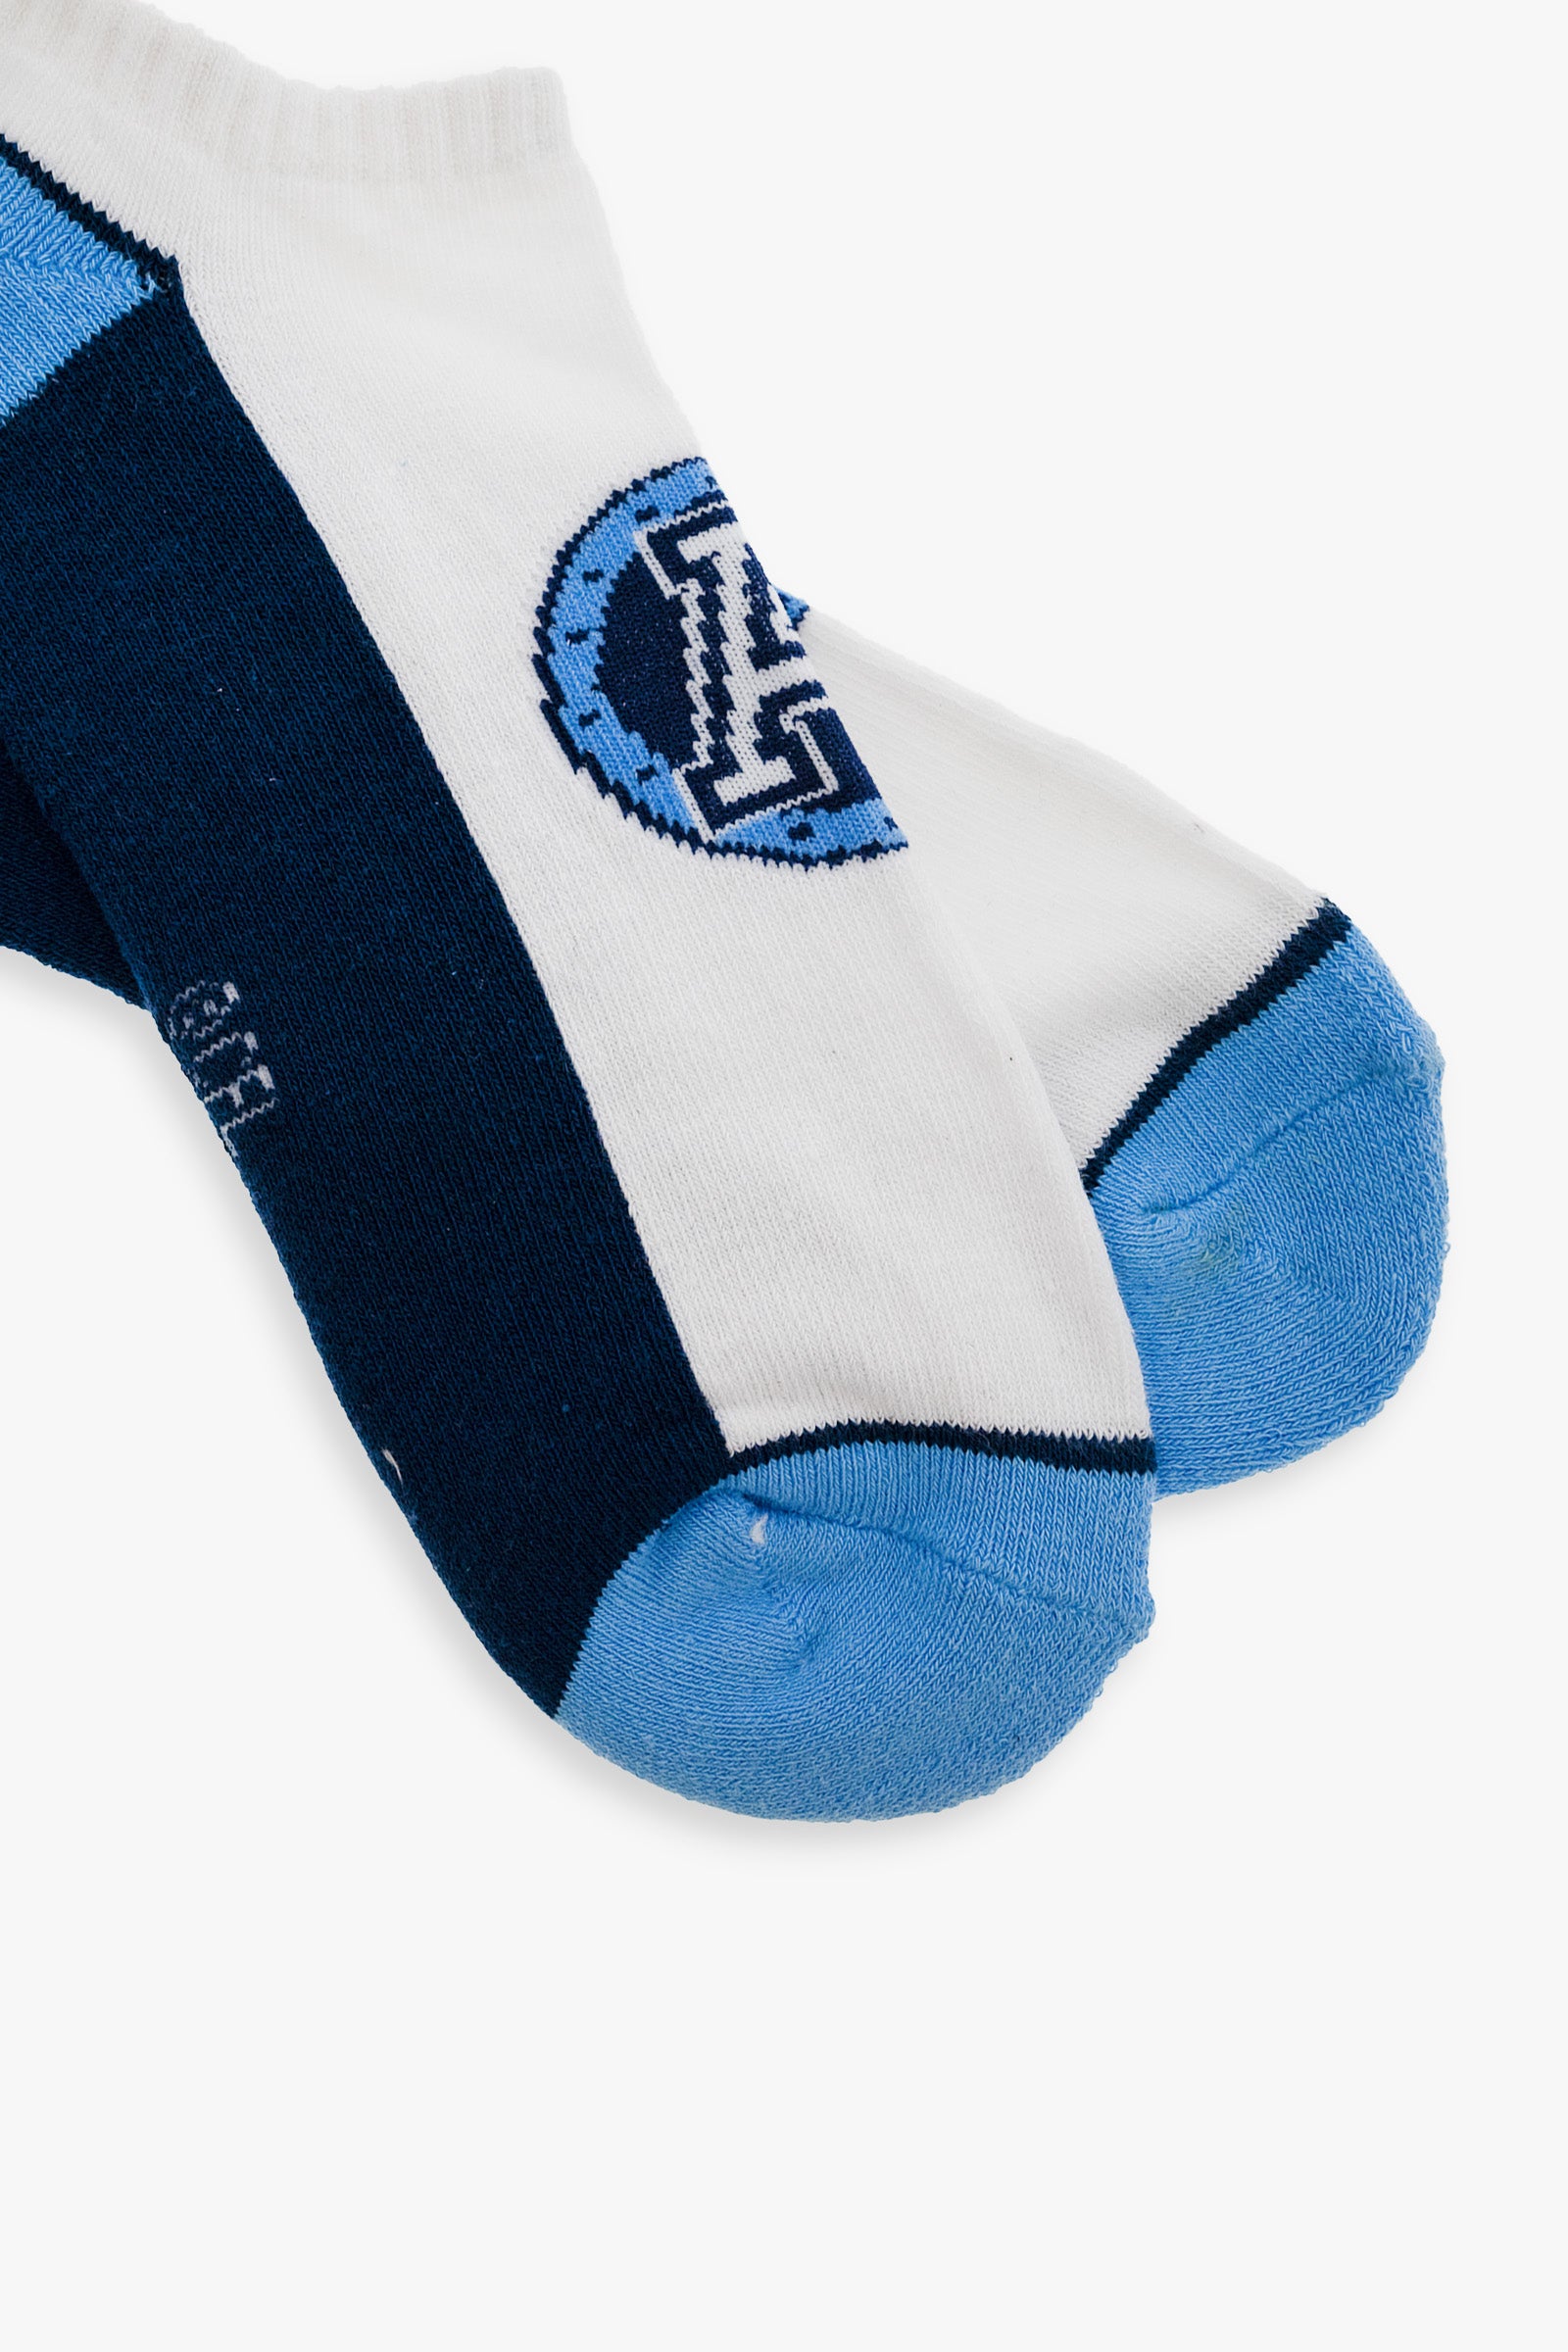 Gertex CFL Toronto Argonauts Men's 3-Pack No Show Ankle Socks